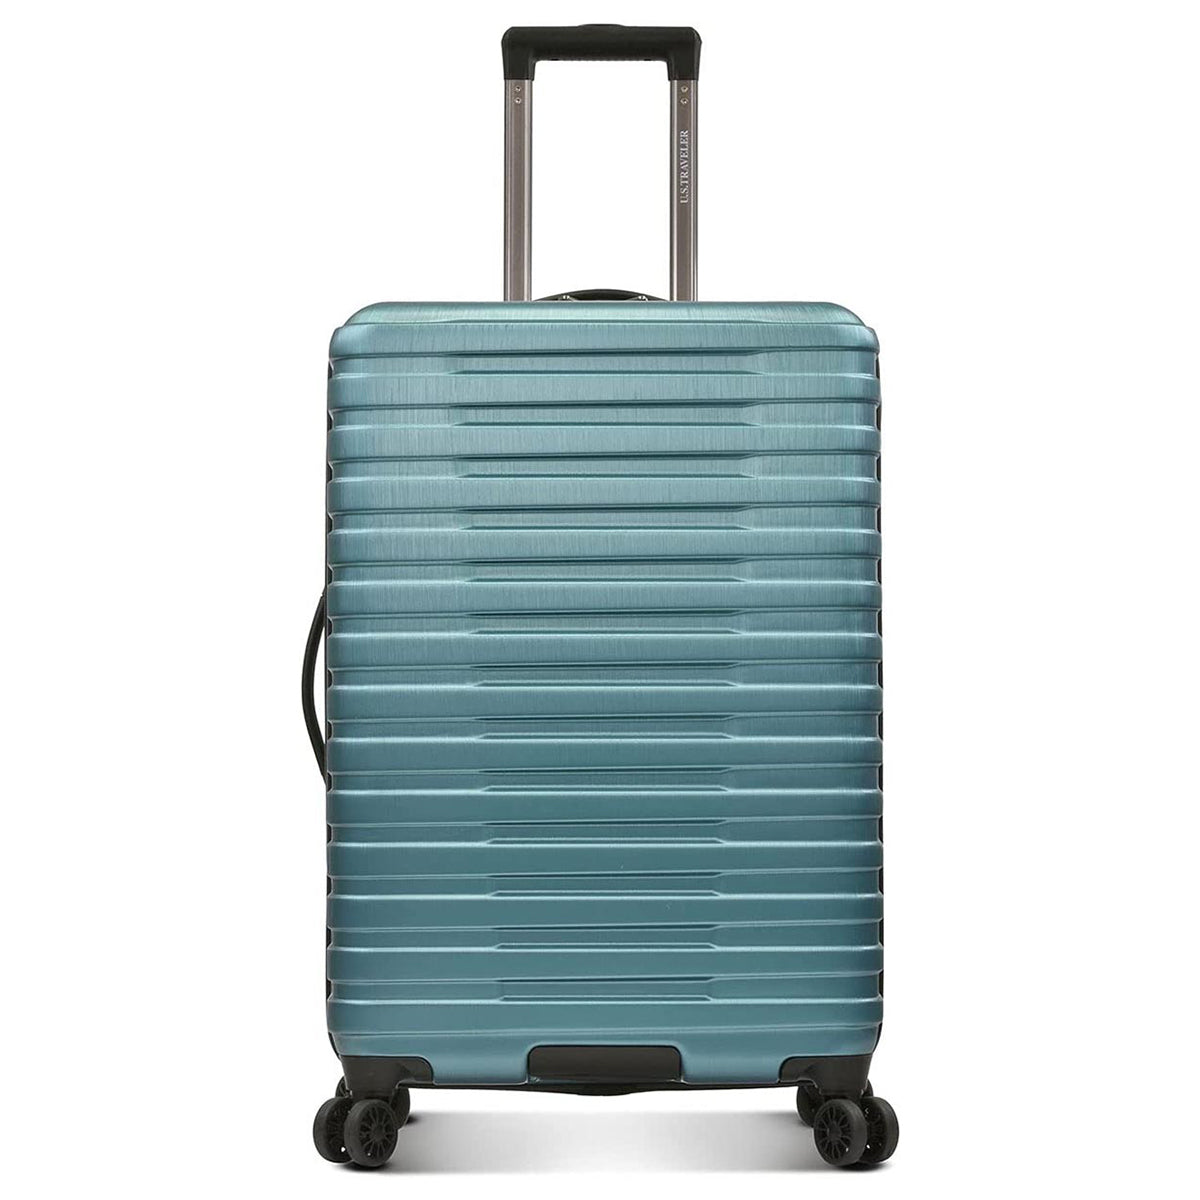 traveller brand suitcase